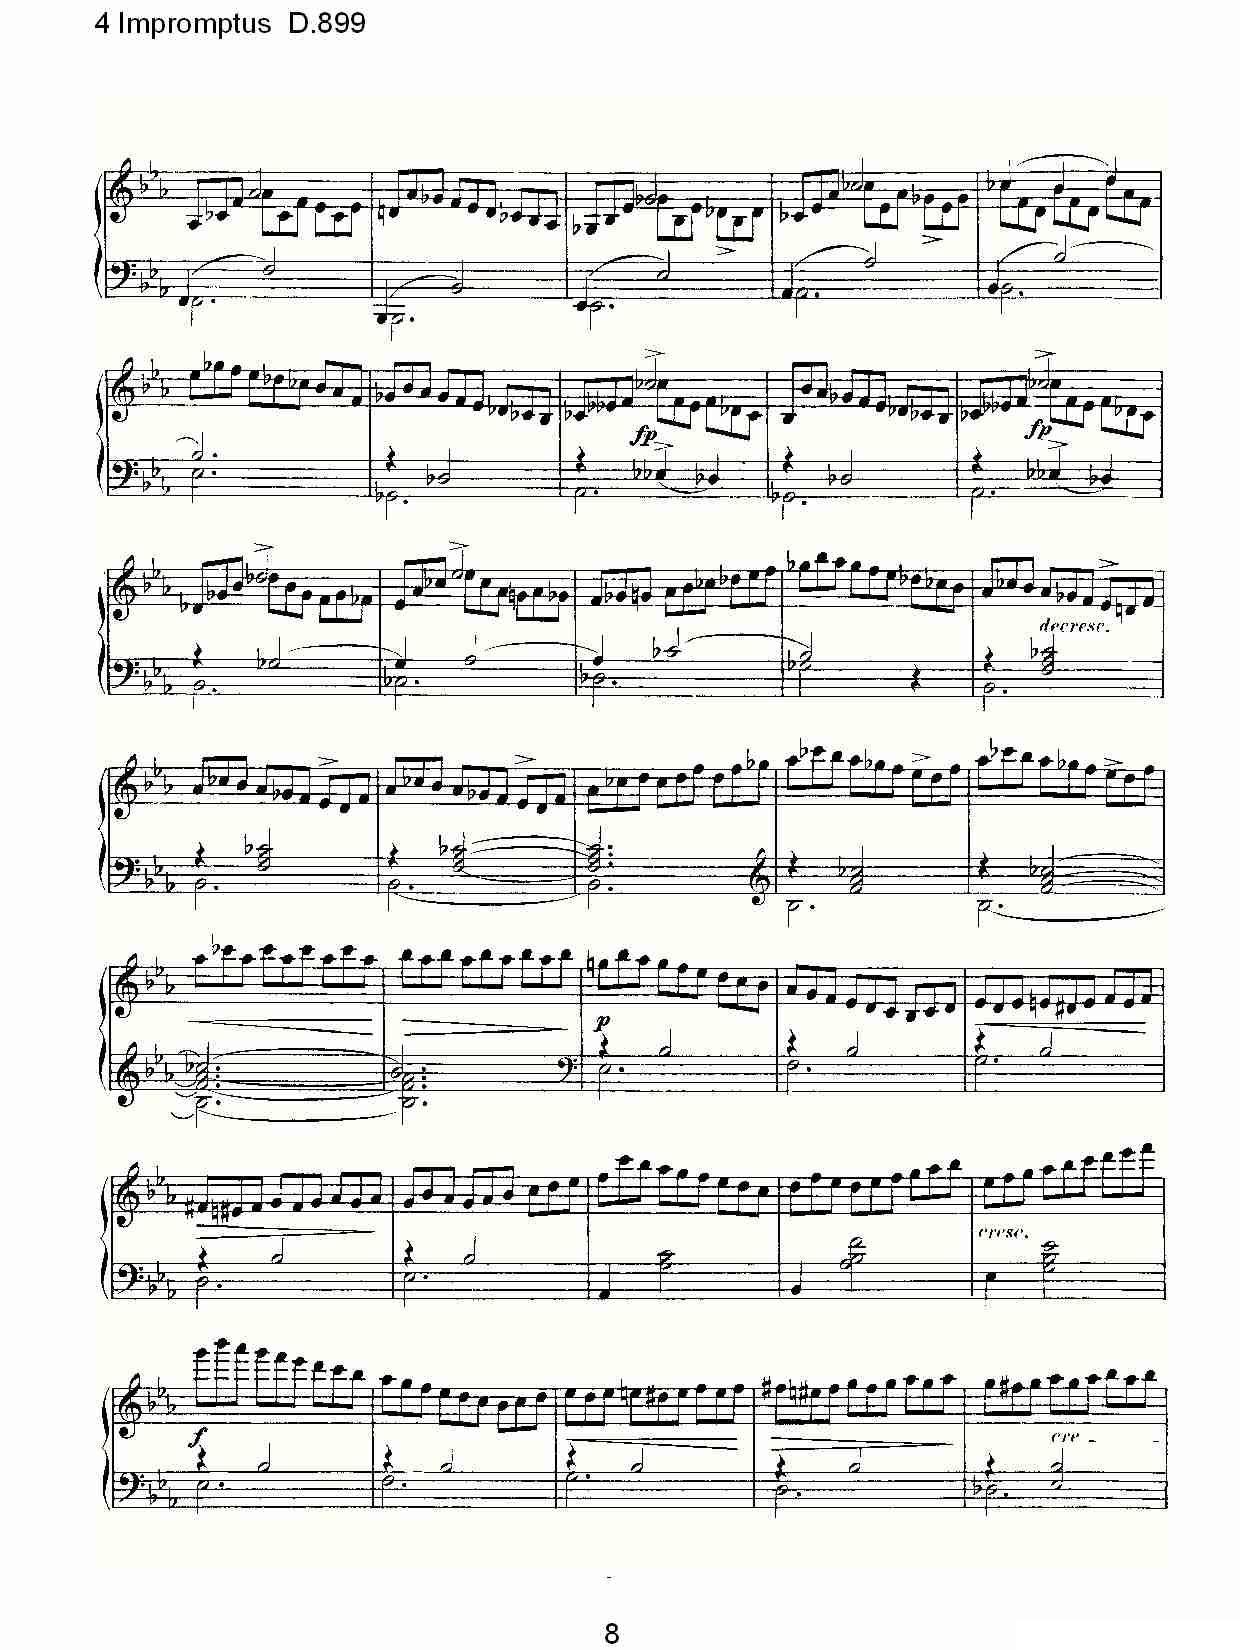 4 Impromptus D.899（4人即兴演奏 D.899）钢琴曲谱（图8）